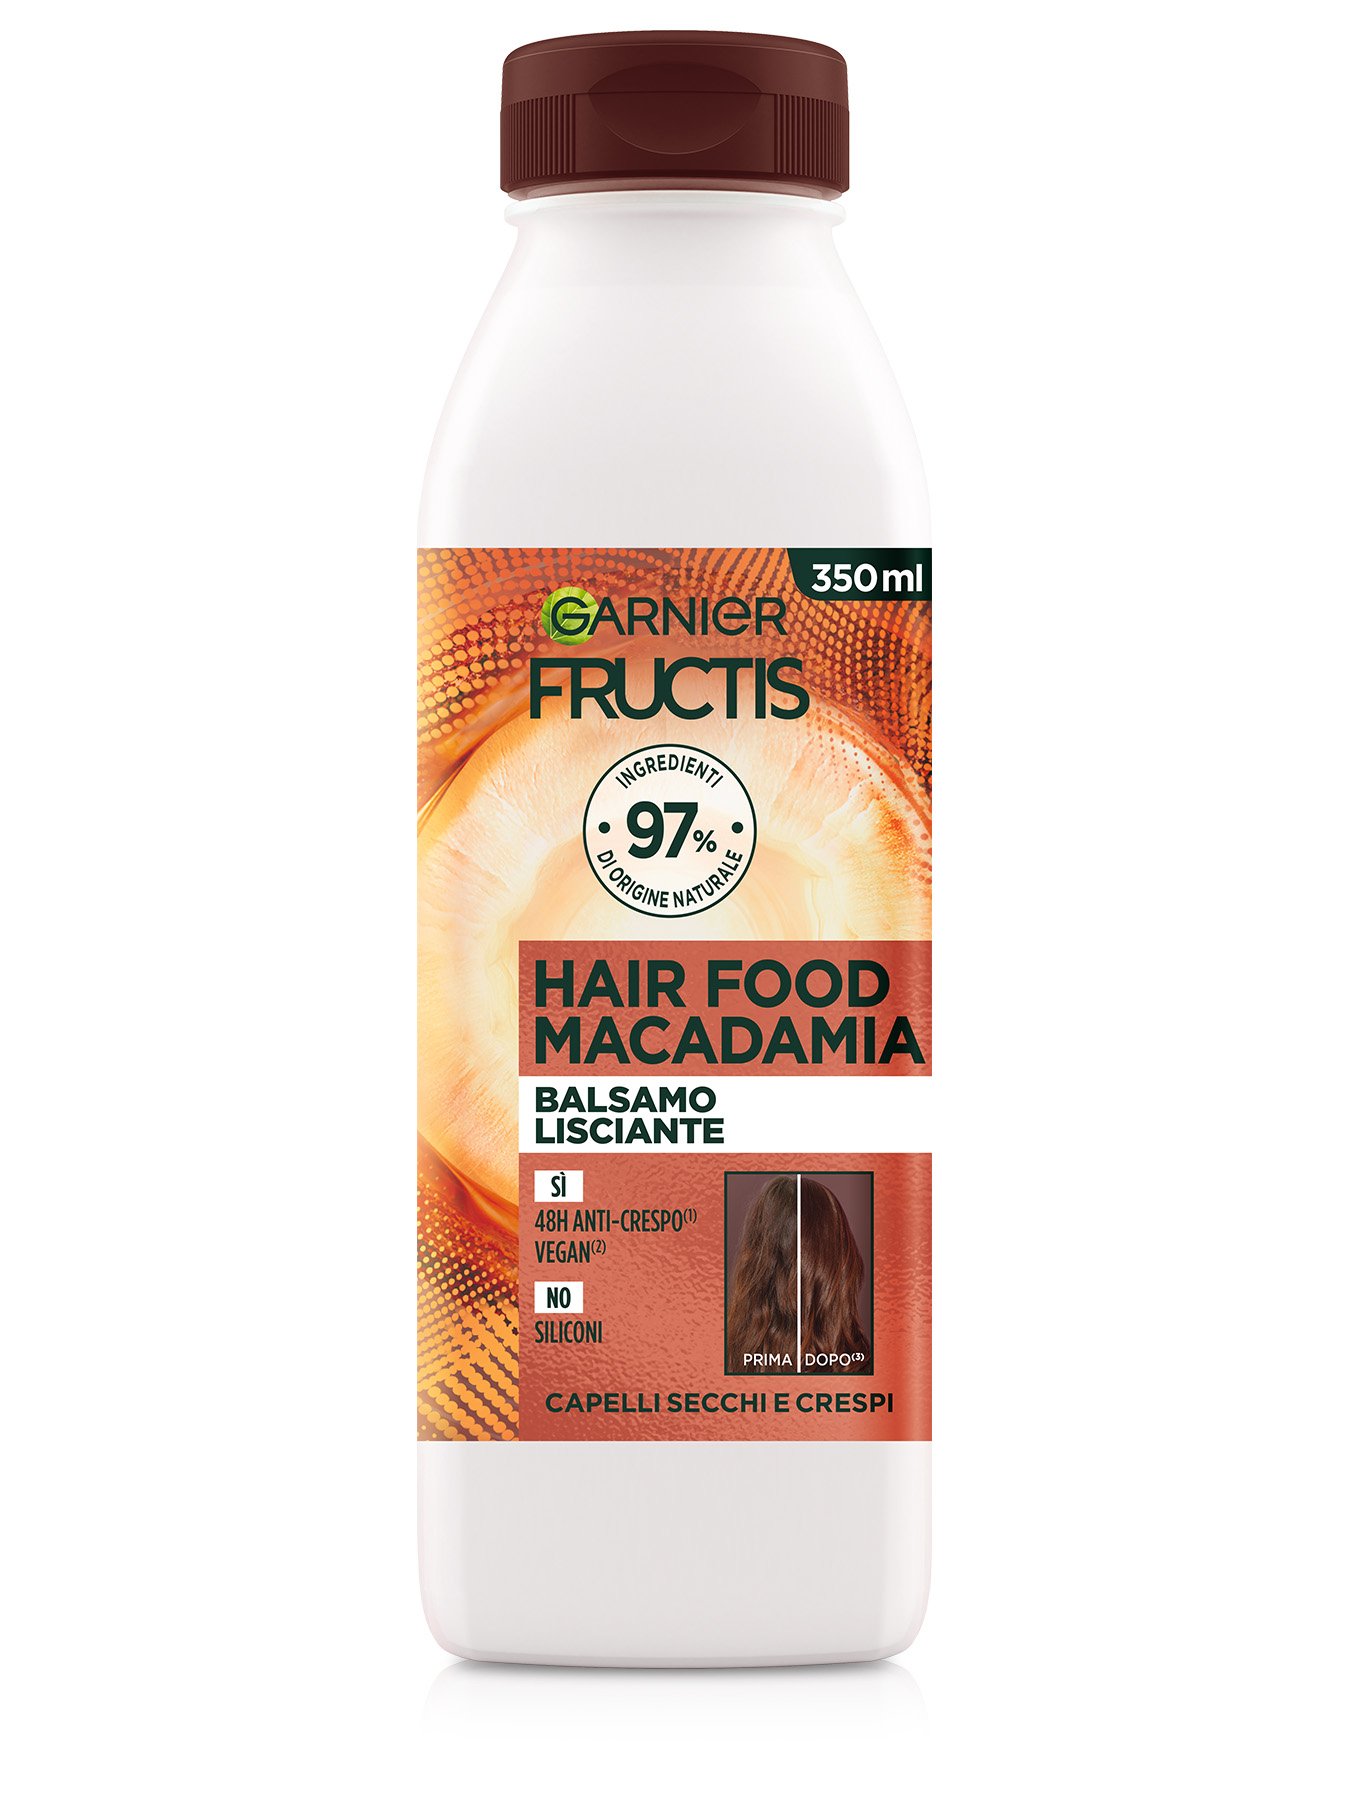 Fructis Hair Food Macadamia Balsamo